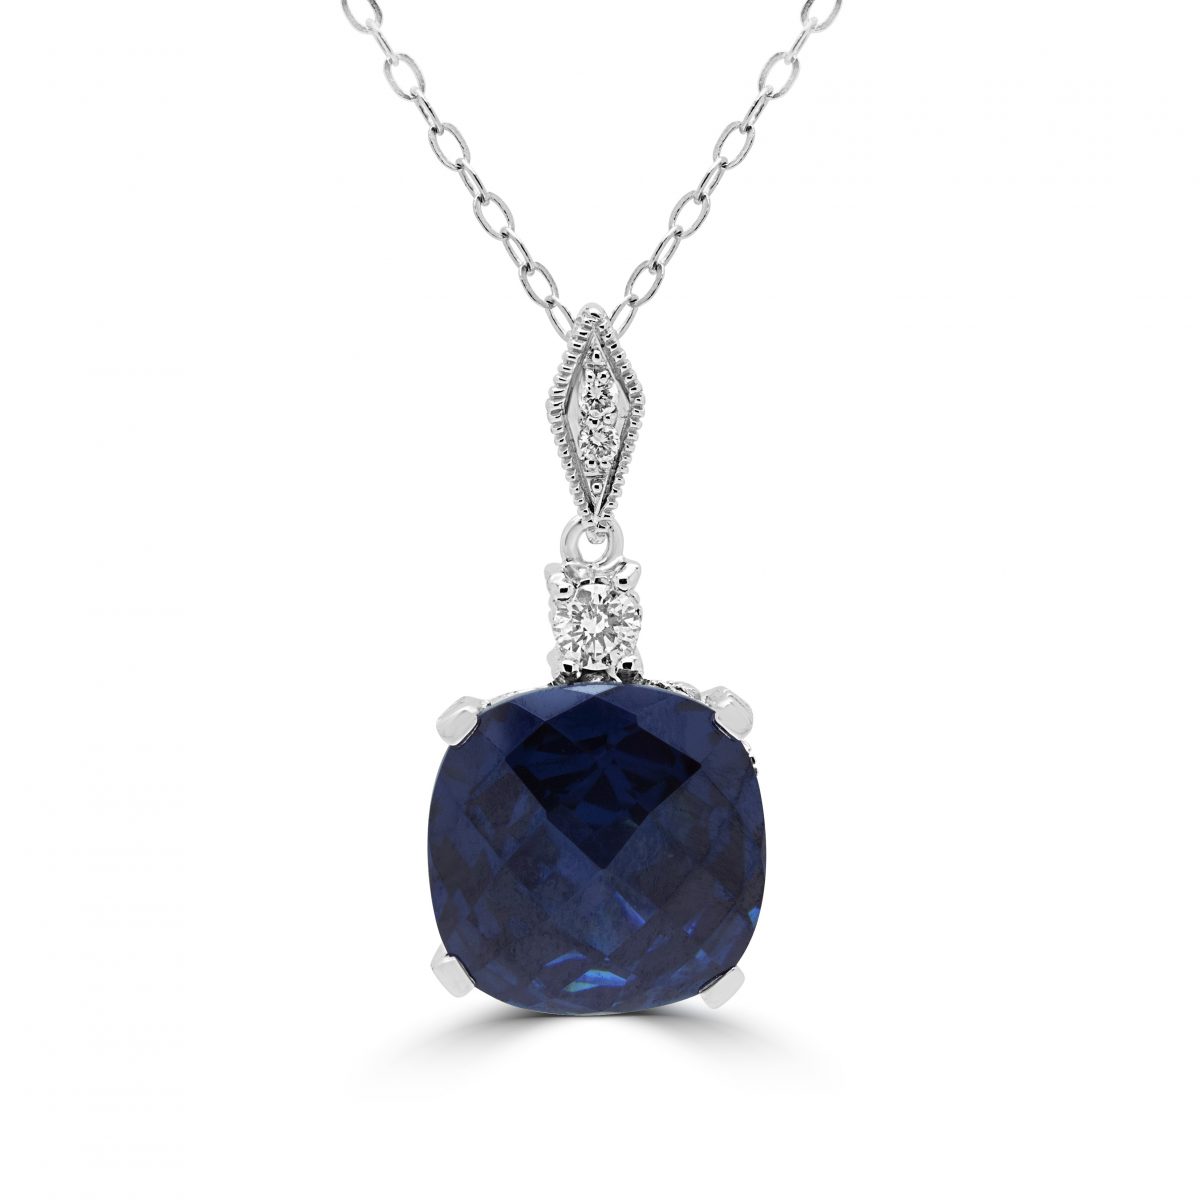 Diamond & sapphire color Cubic Zirconia pendant necklace in 14k gold